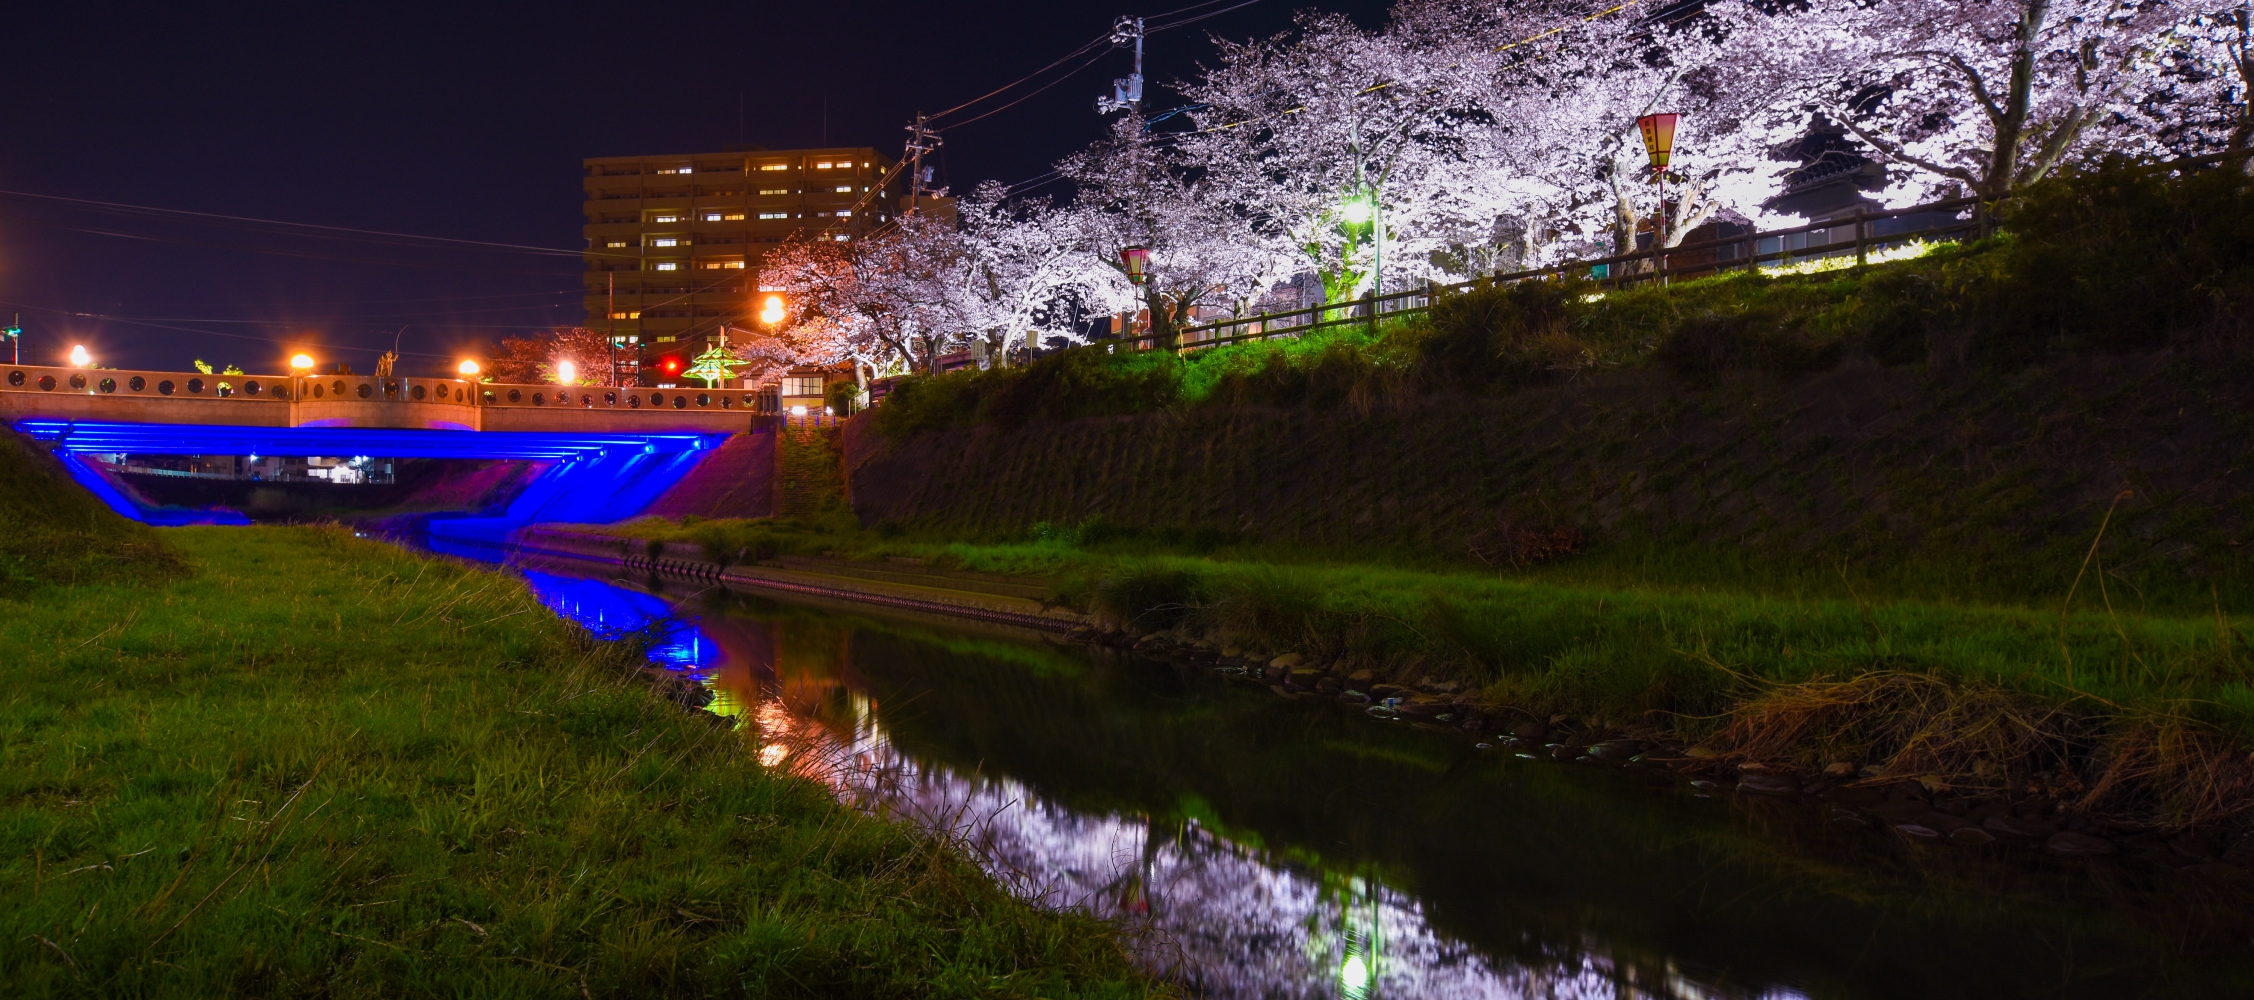 illumination design around FUKUROGAWA River